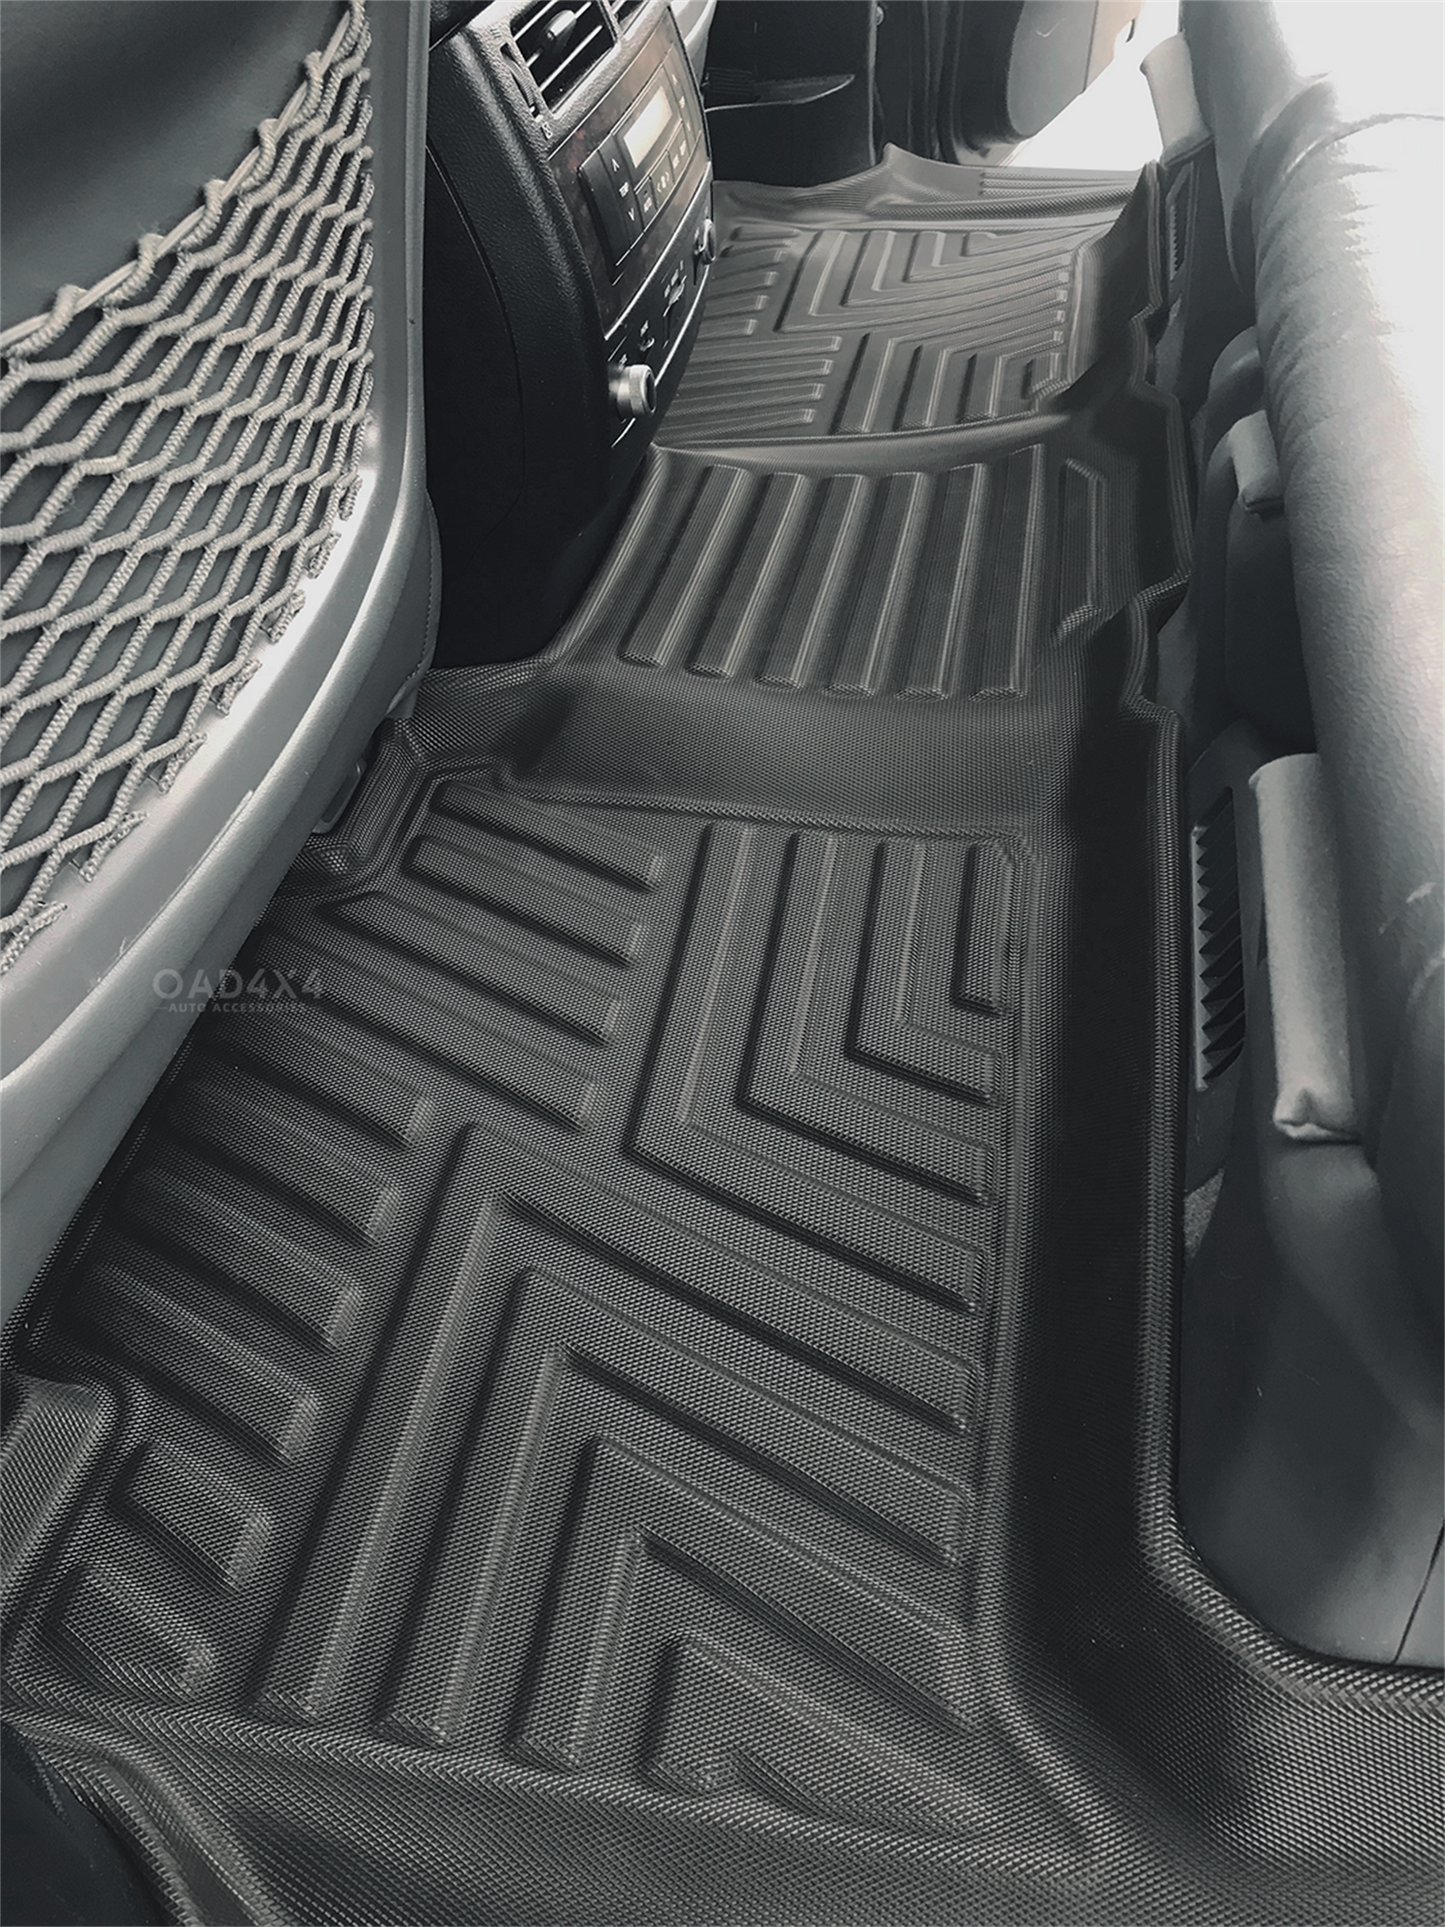 3 Rows Floor Mats for Lexus LX570 2013-2021 Tailored TPE 5D Door Sill Covered Floor Mat Liner